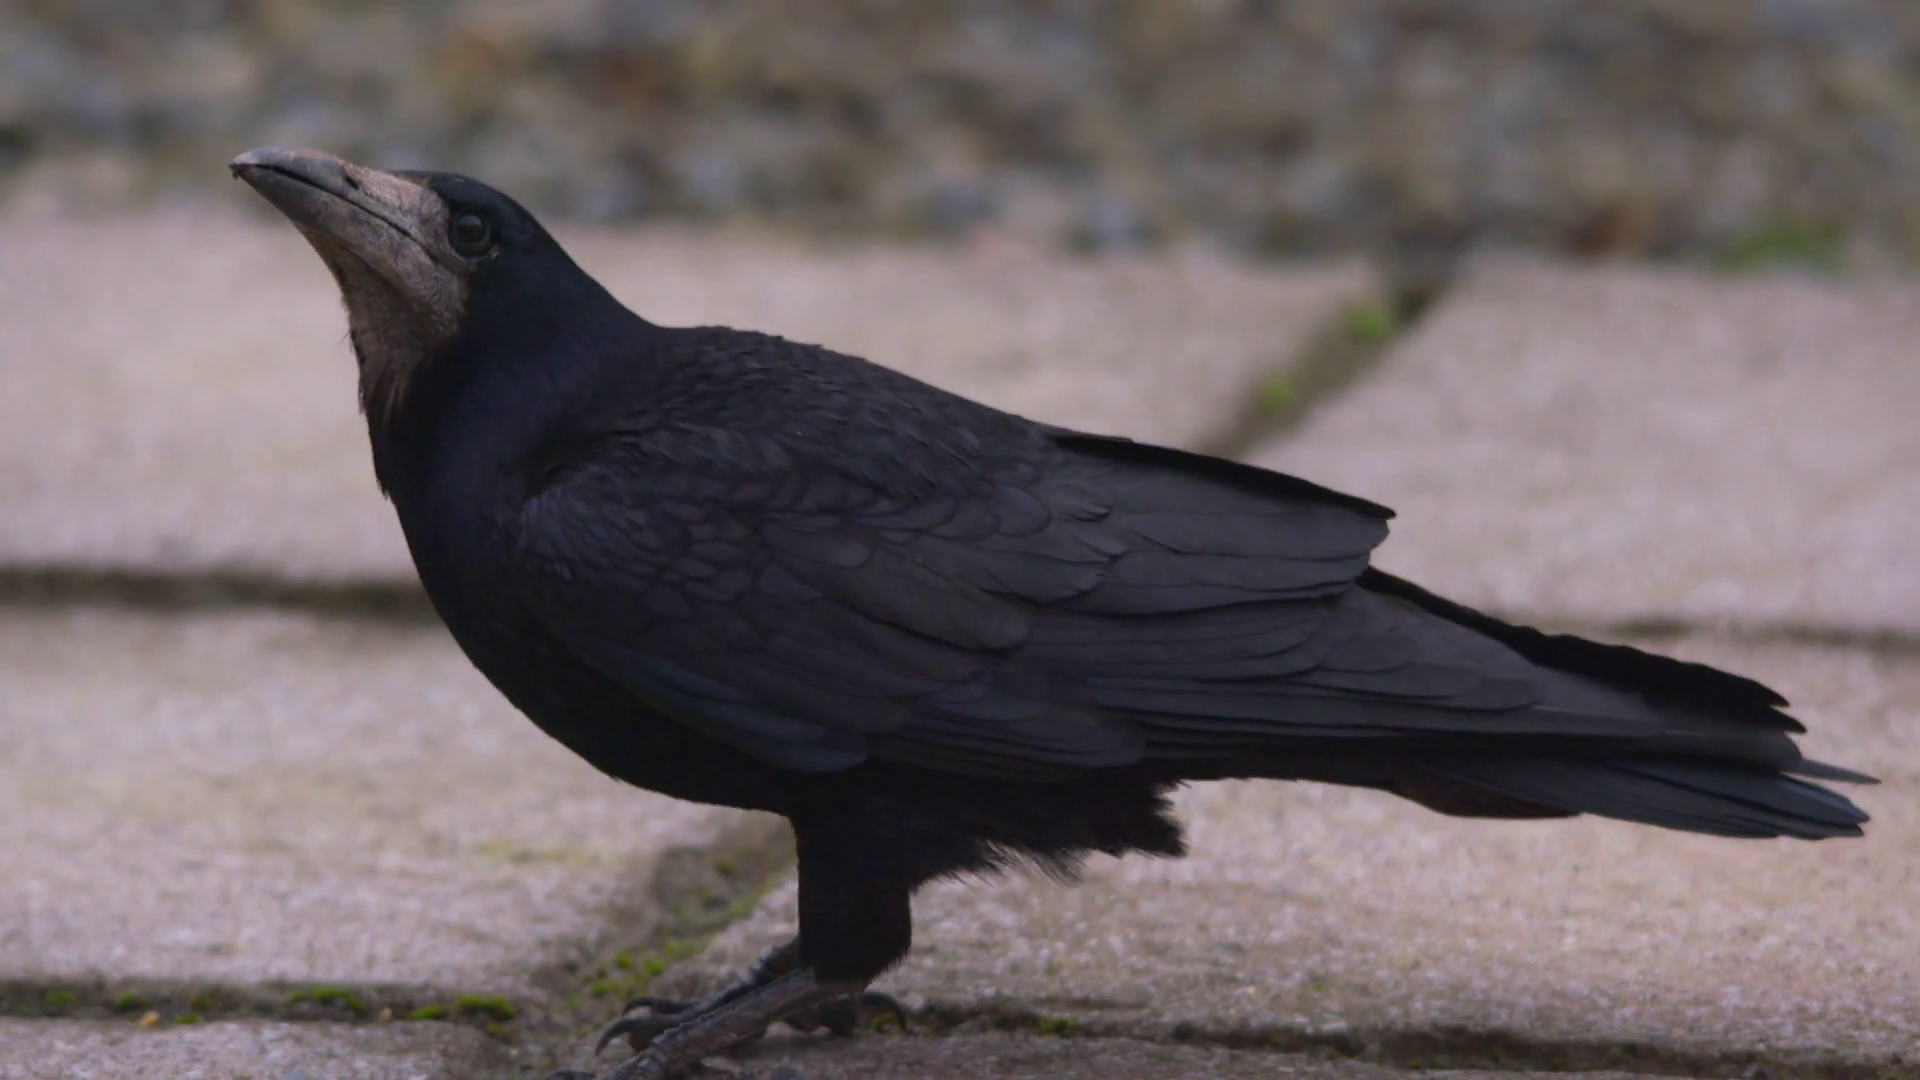 Black Crow With Grey Beak On Paving Stones Slow Motion Stock Video ...